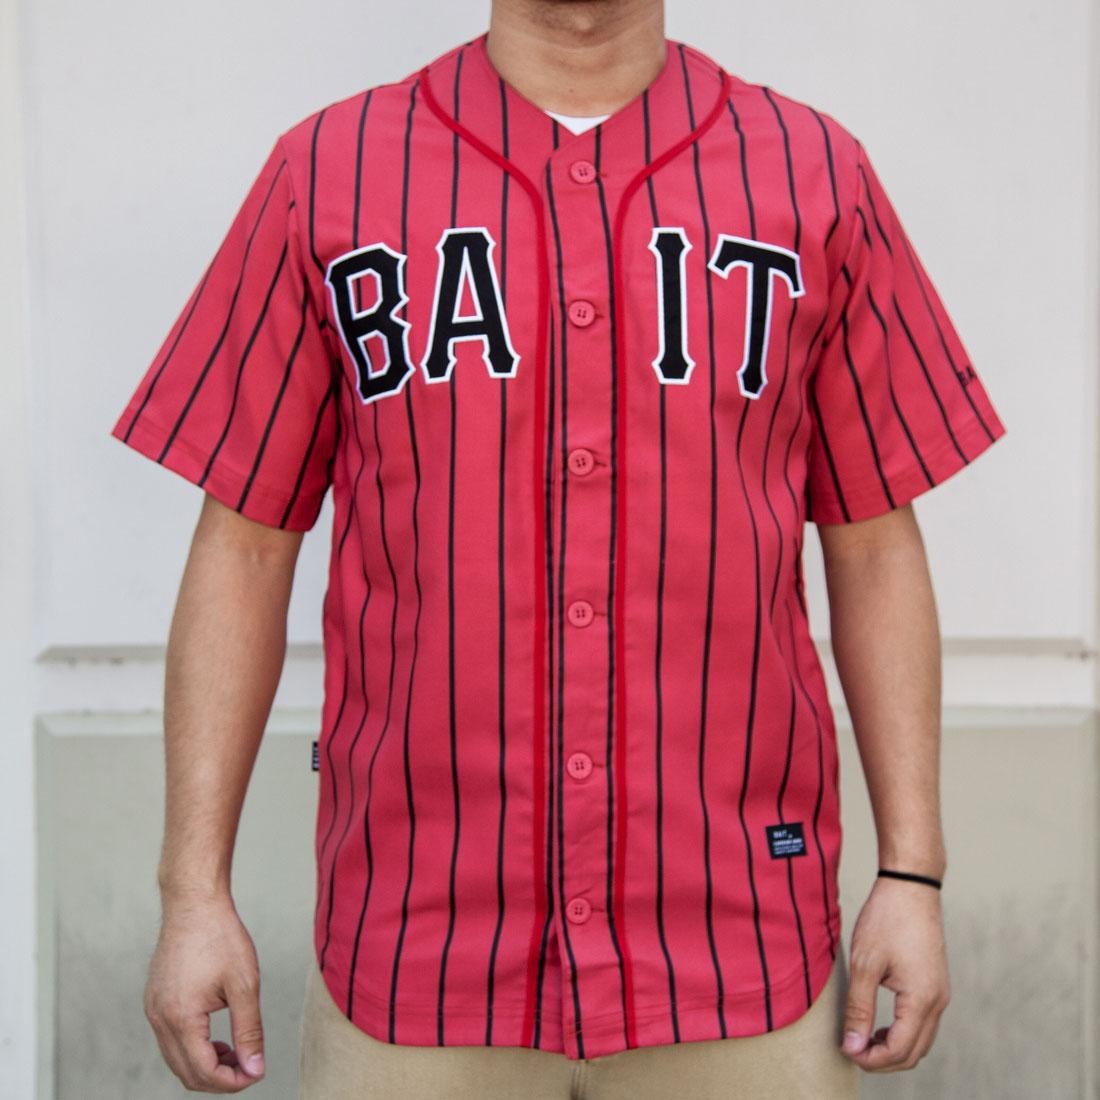 red black baseball jersey